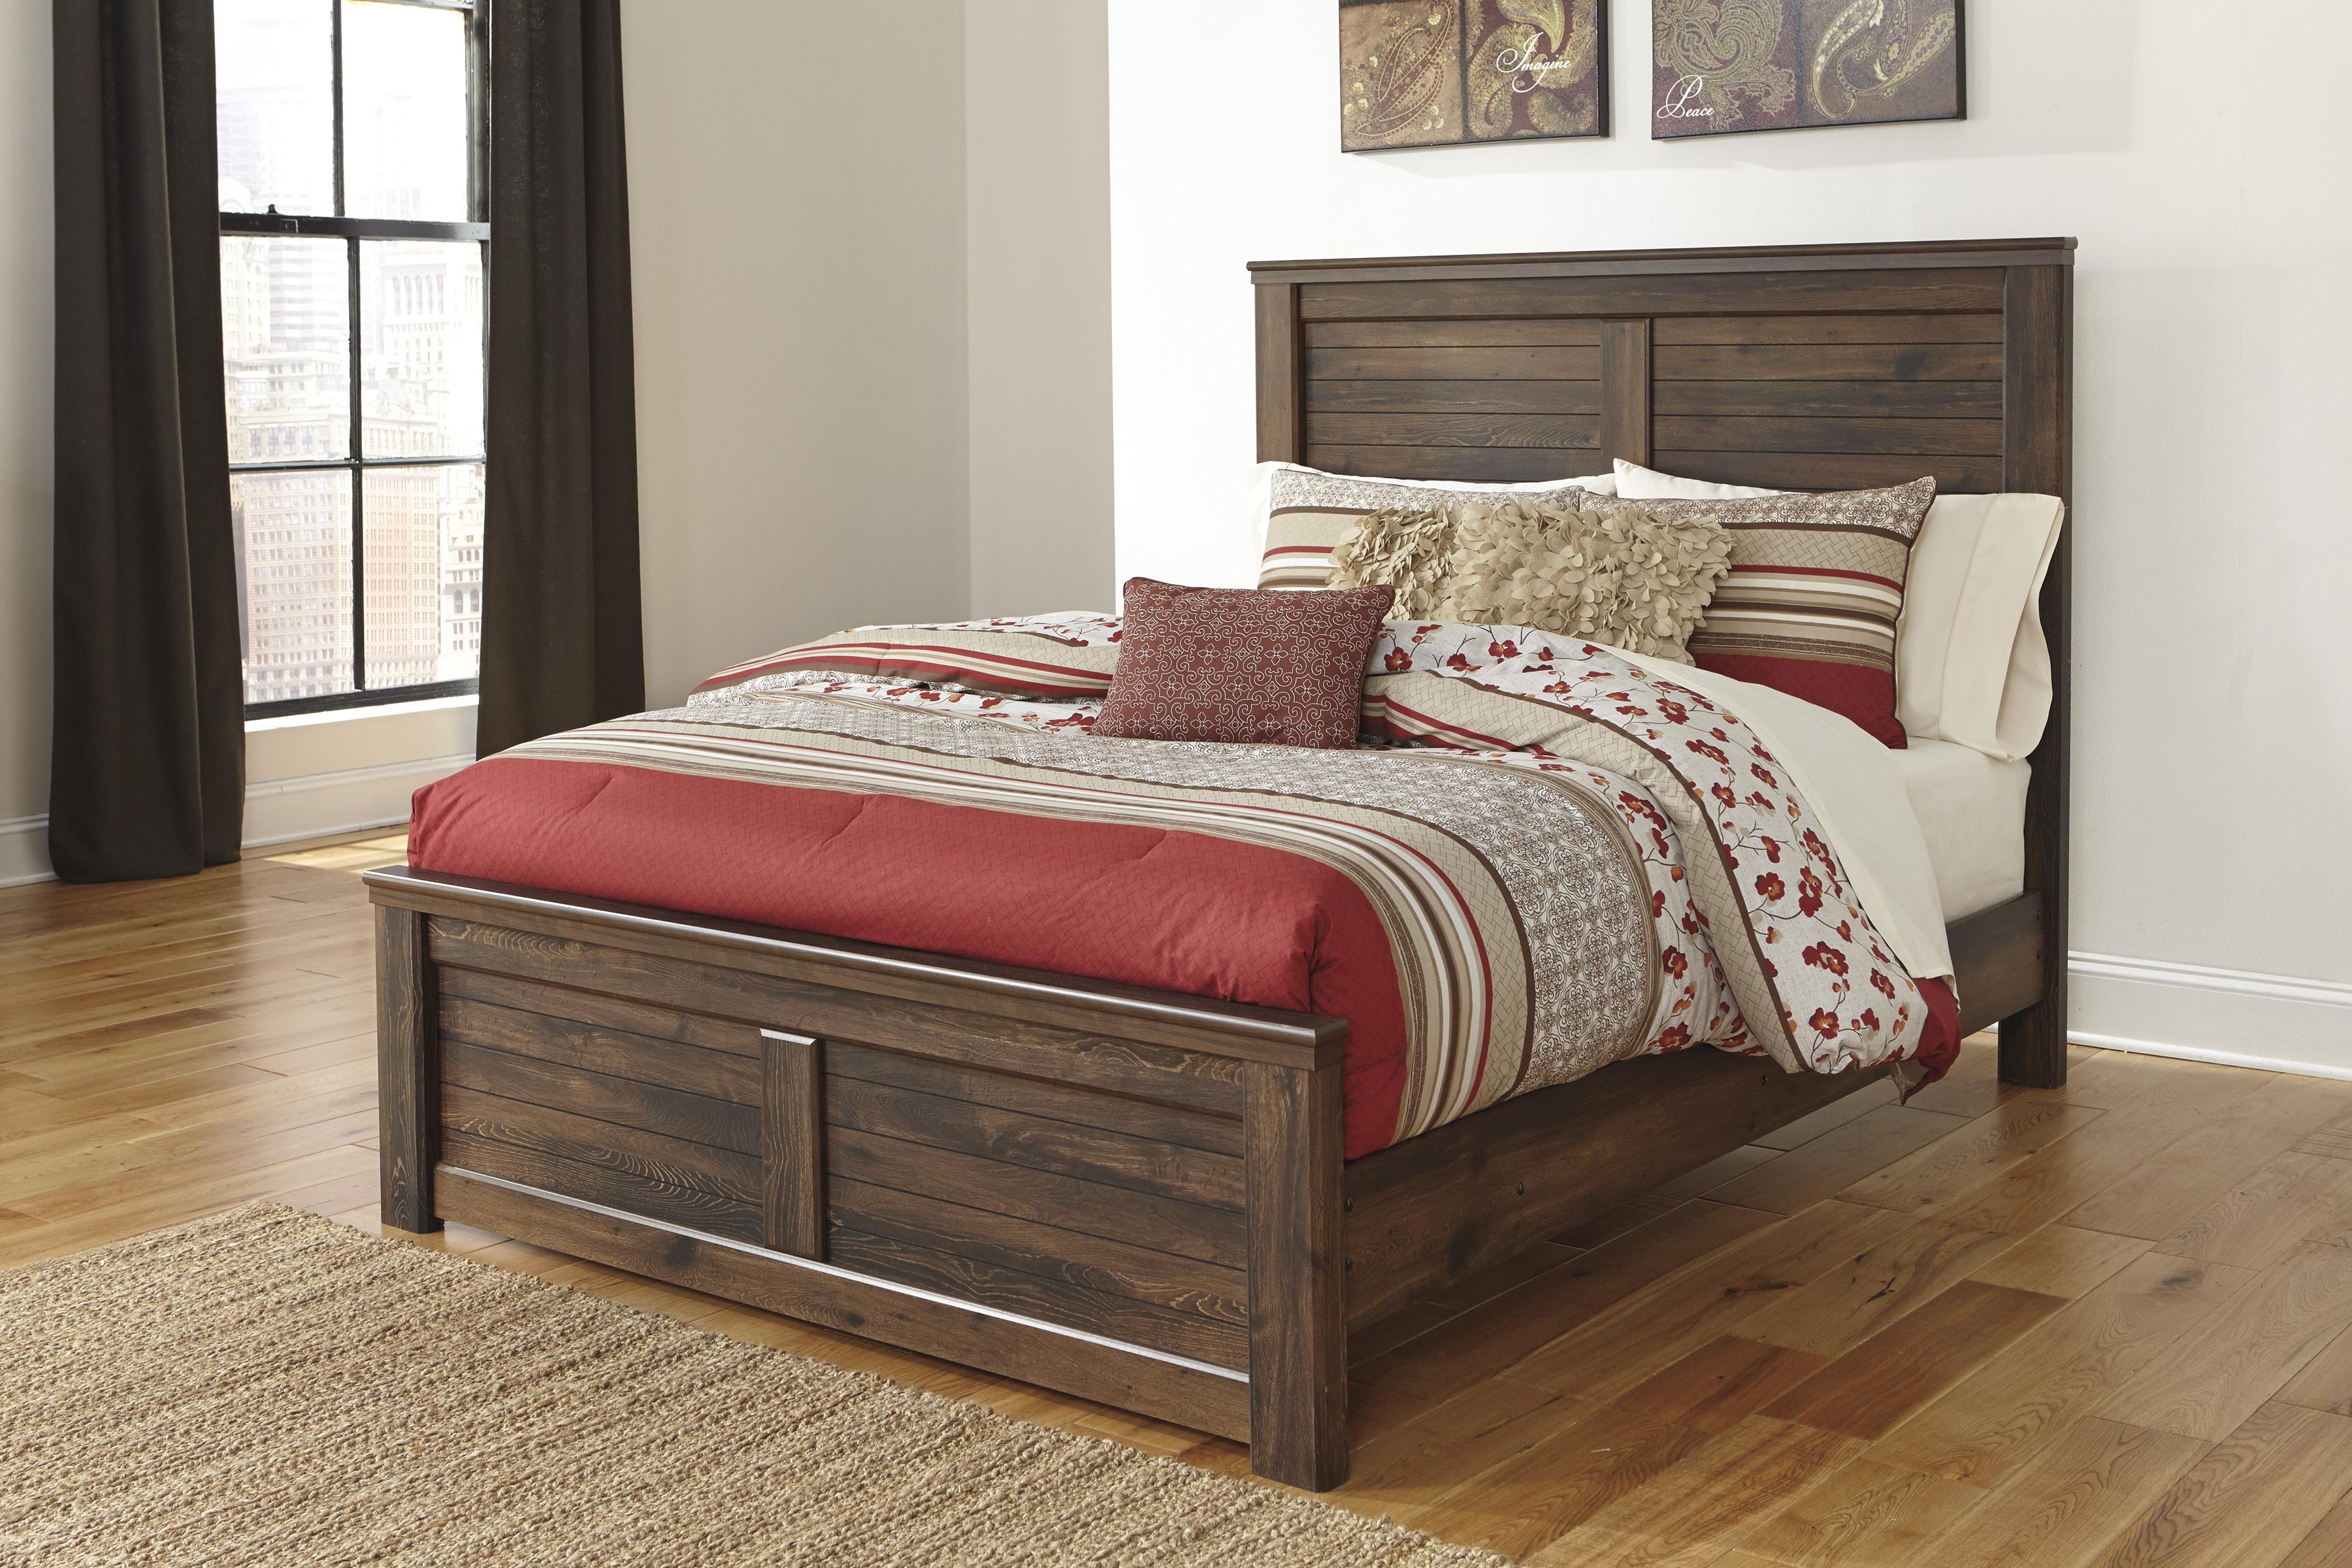 Ashley Quinden B246 King Size Panel Bedroom Set 5pcs In Dark Brown Buy Online On Ny Furniture